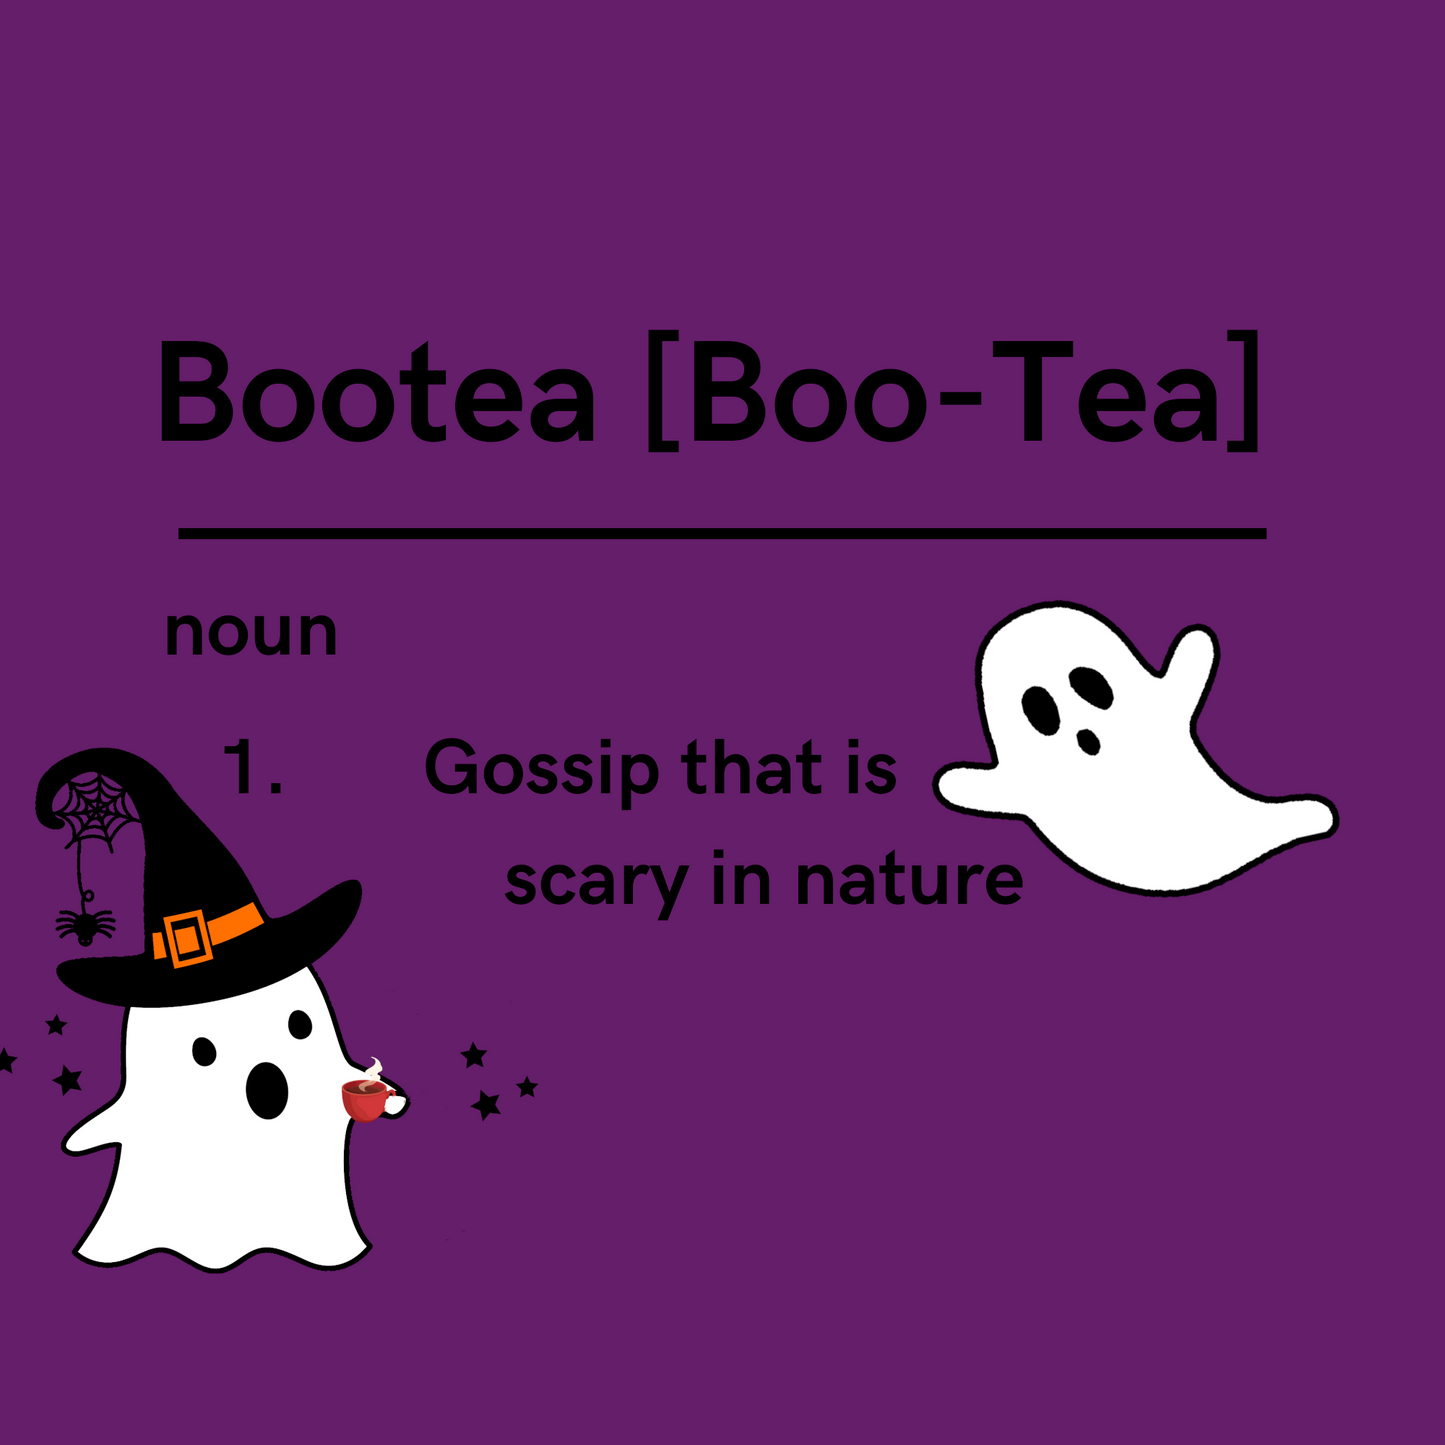 Boo-tea